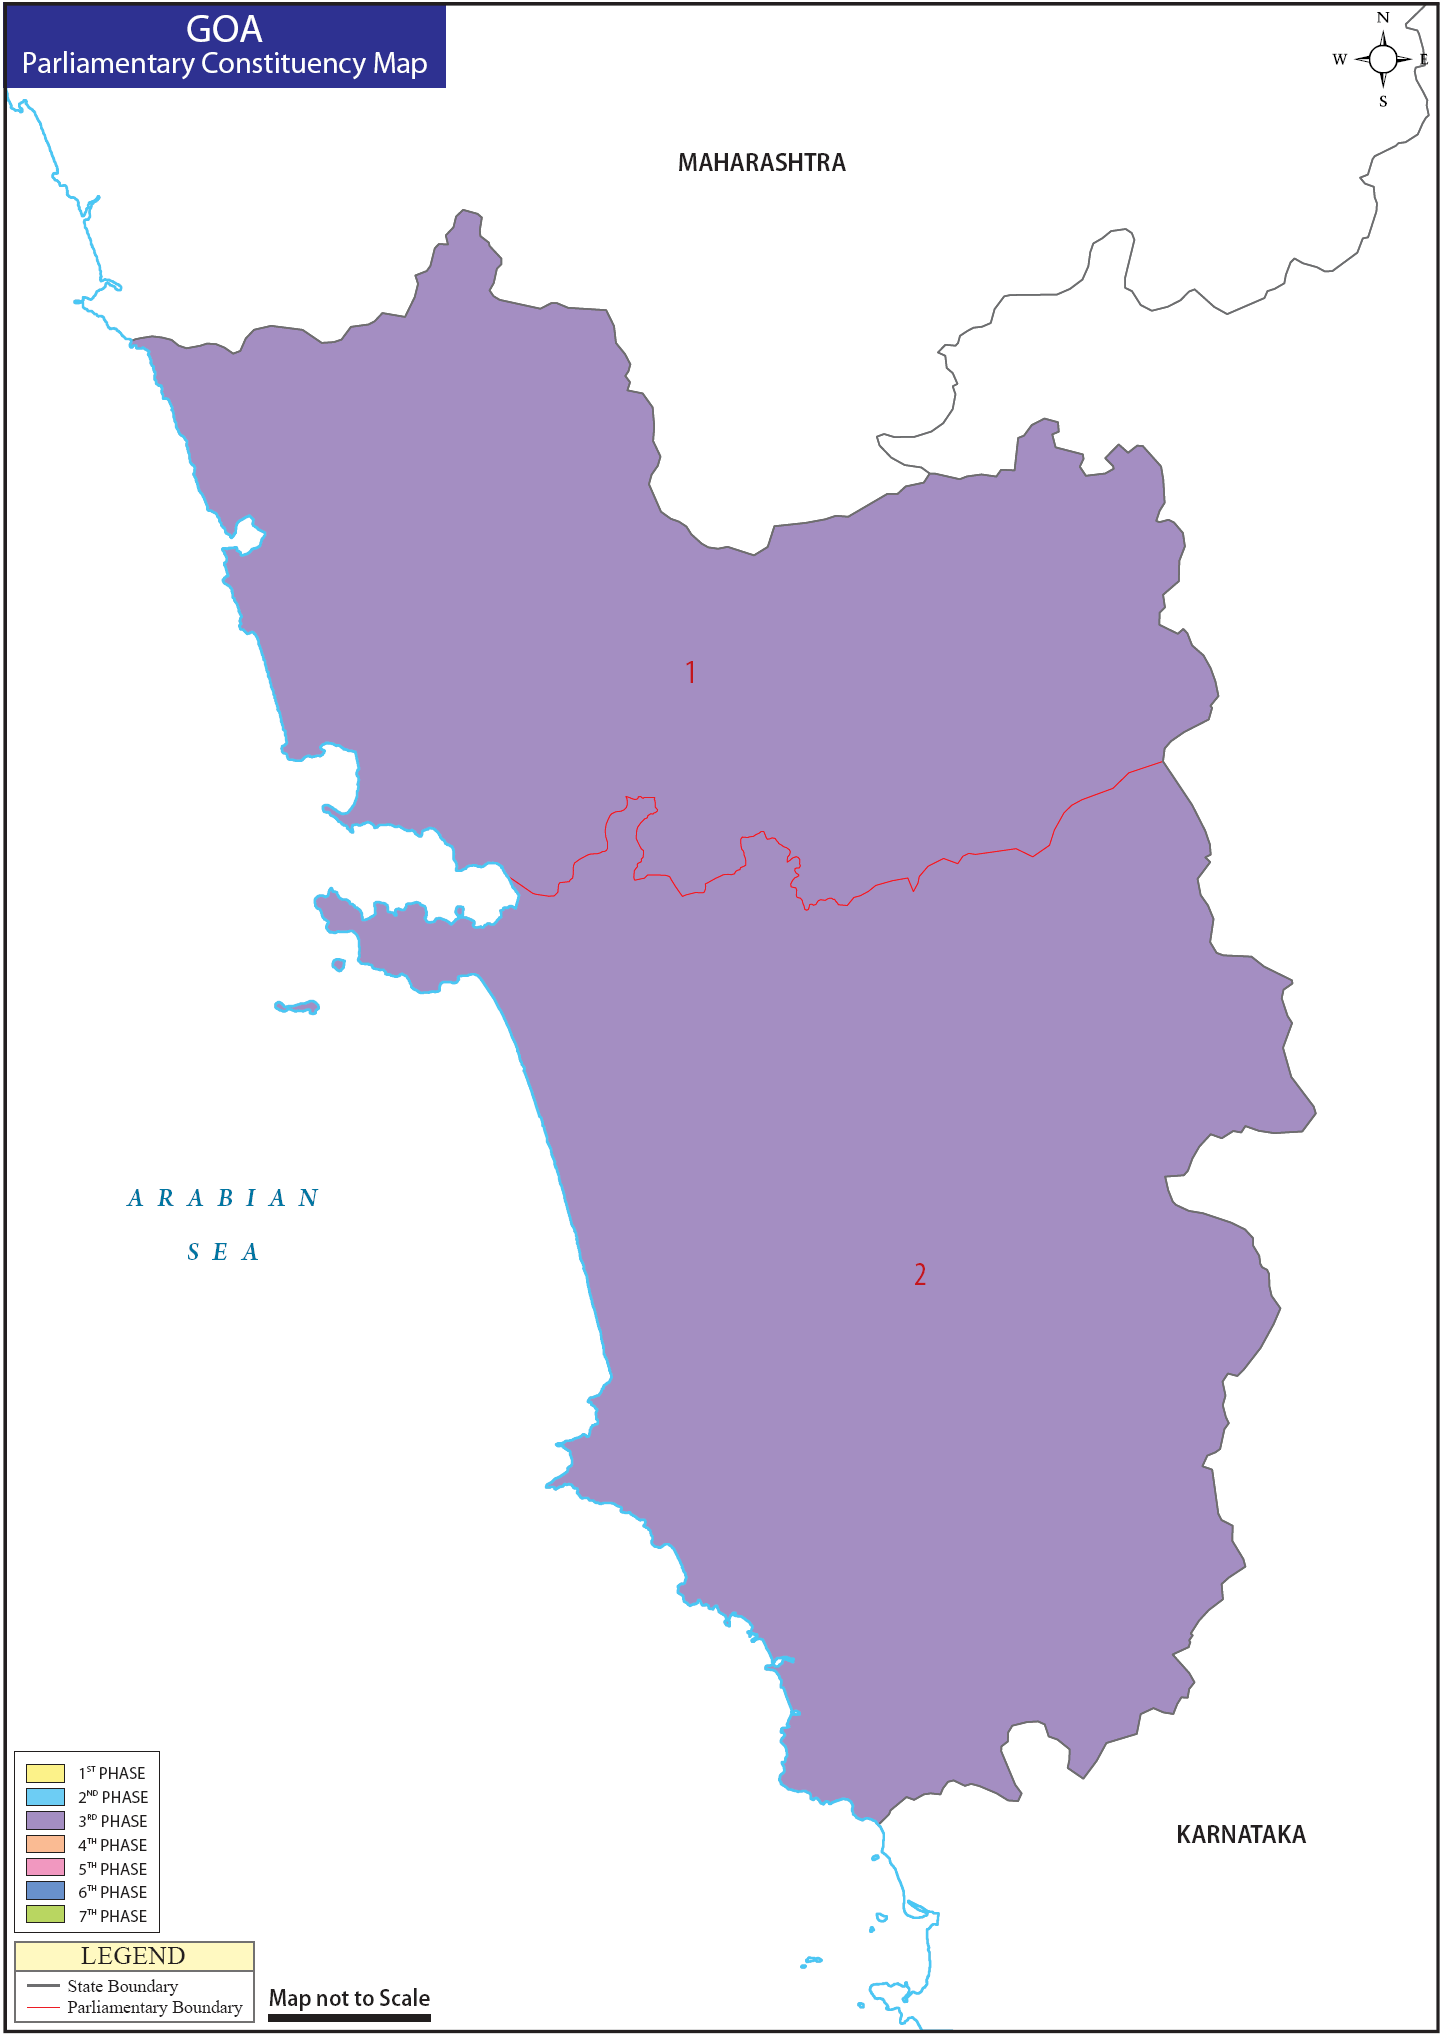 Goa Parliamentary Constituency Map